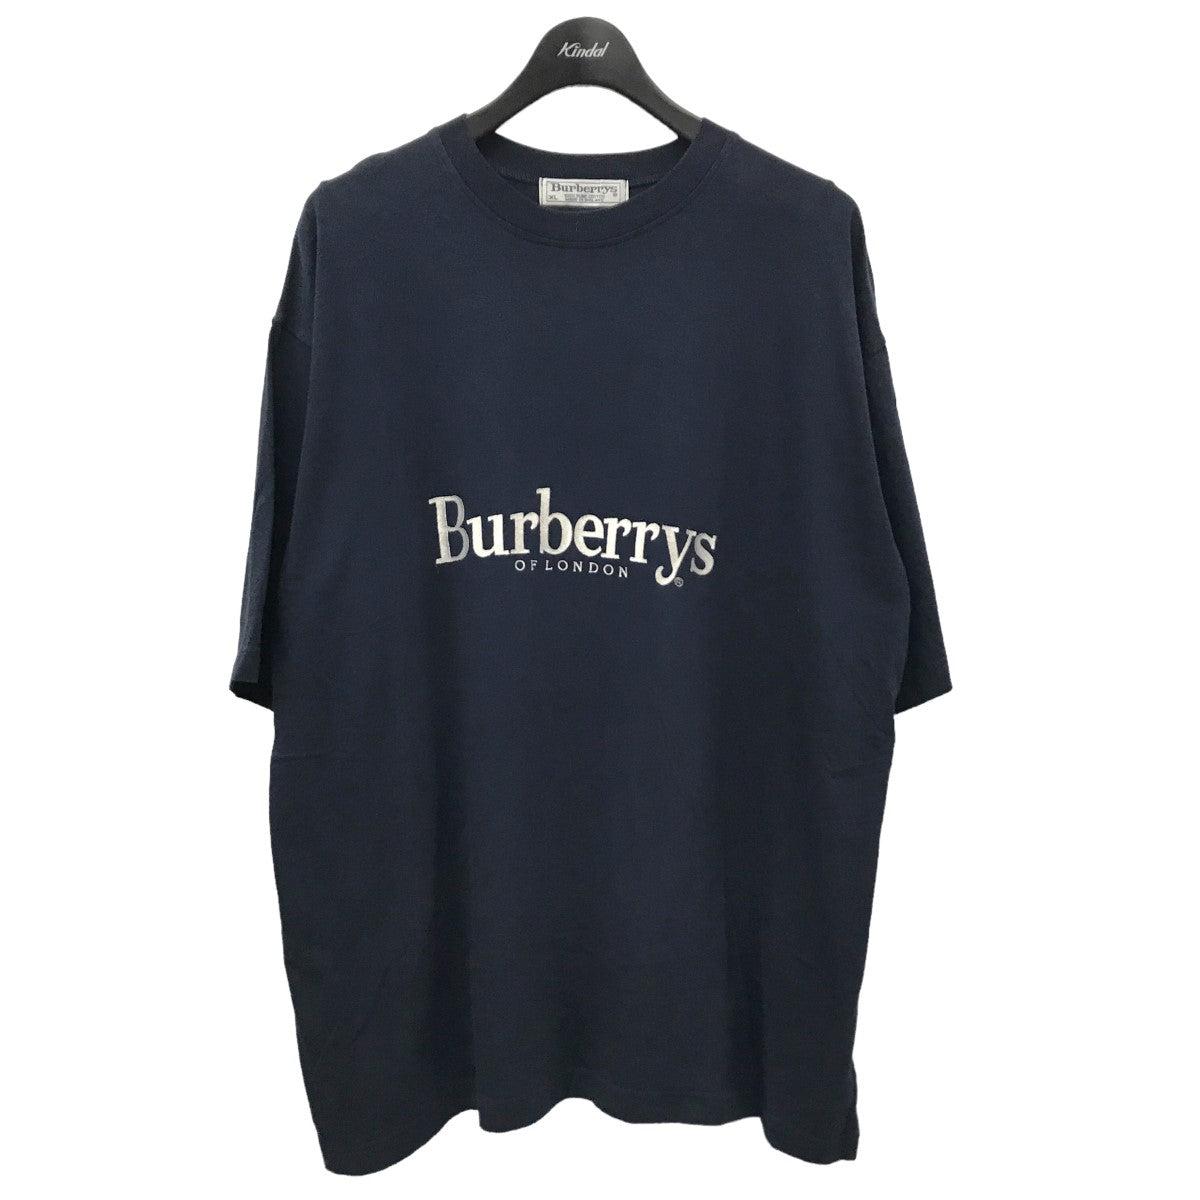 Burberry’s(バーバリーズ) ロゴ刺繍 クルーネックTシャツ ネイビー サイズ 12｜【公式】カインドオルオンライン  ブランド古着・中古通販【kindal】